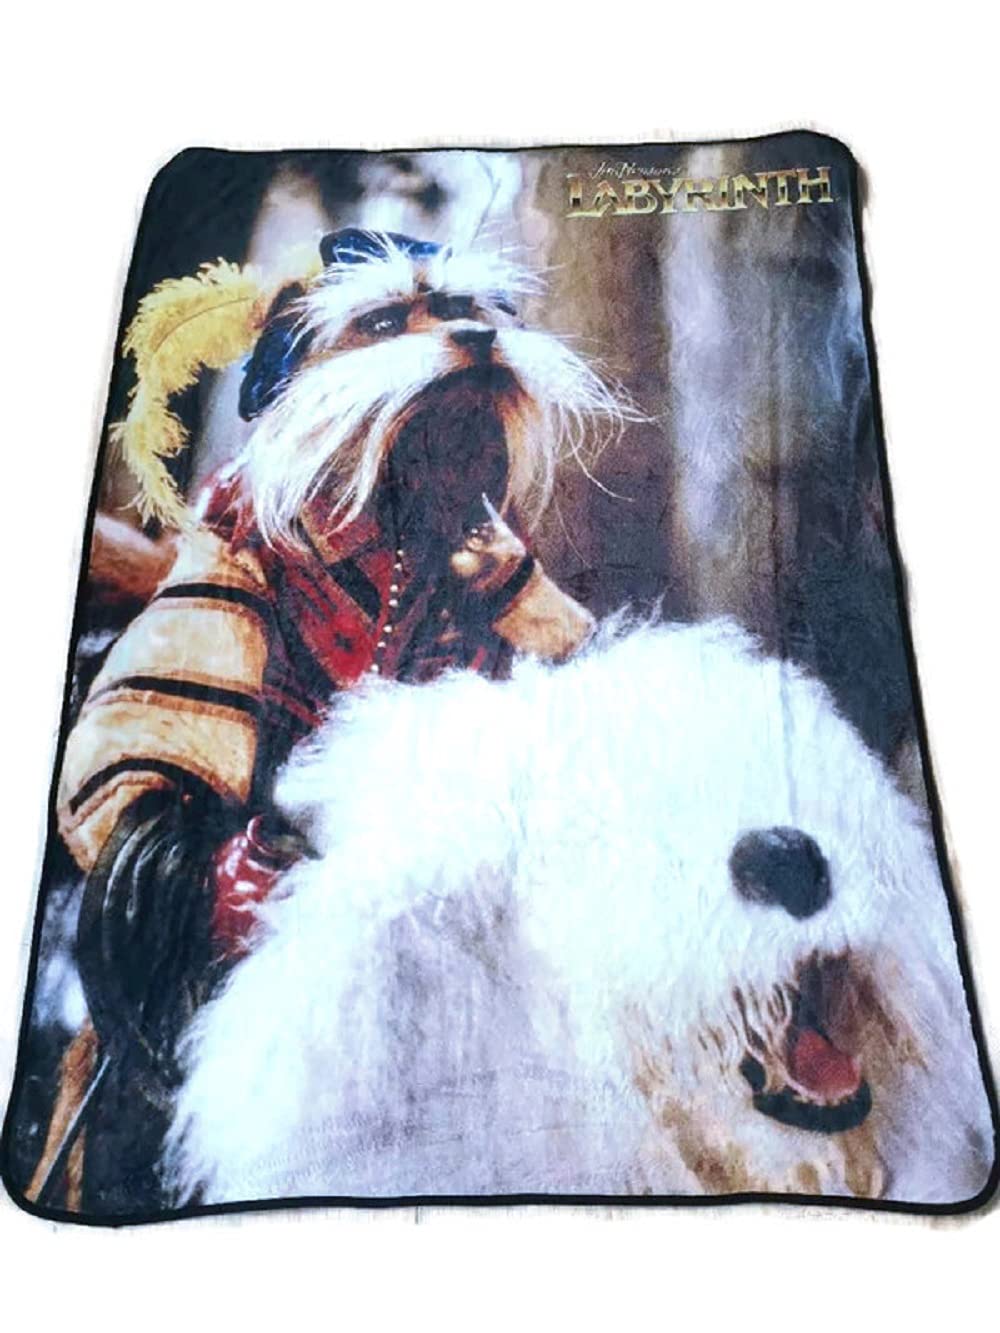 Jim Henson's Labyrinth Sir Didymus Fleece Fleece Softest Throw Blanket| Measures 60 x 45 Inches